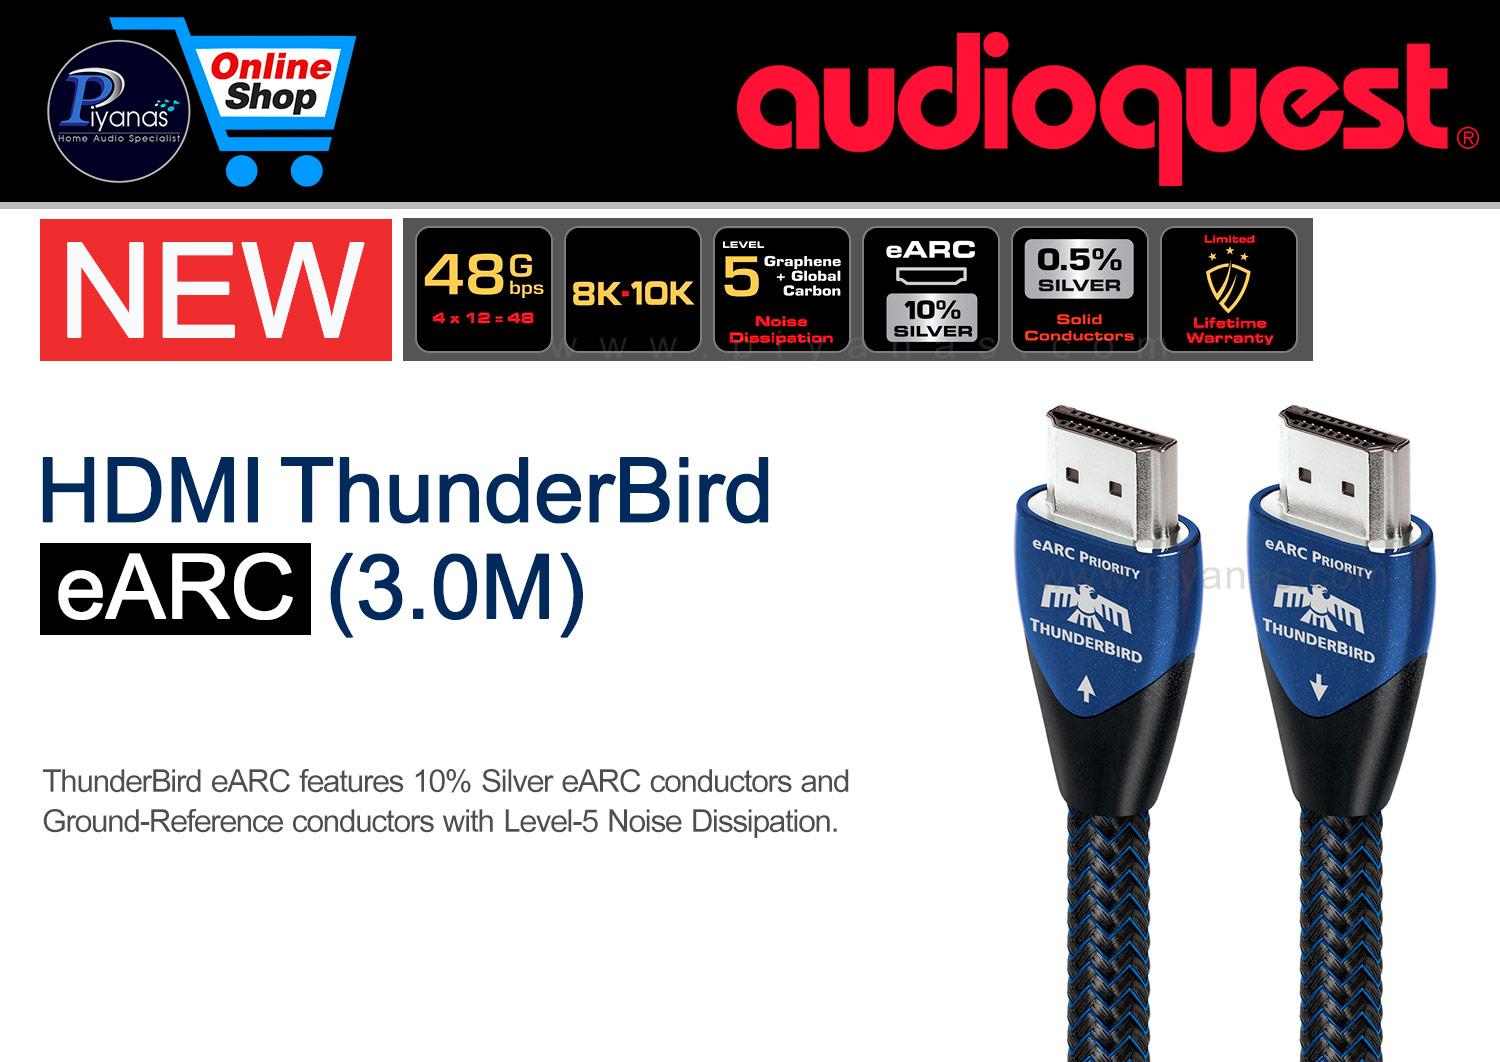 HDMI-ThunderBird eARC (3.0M)